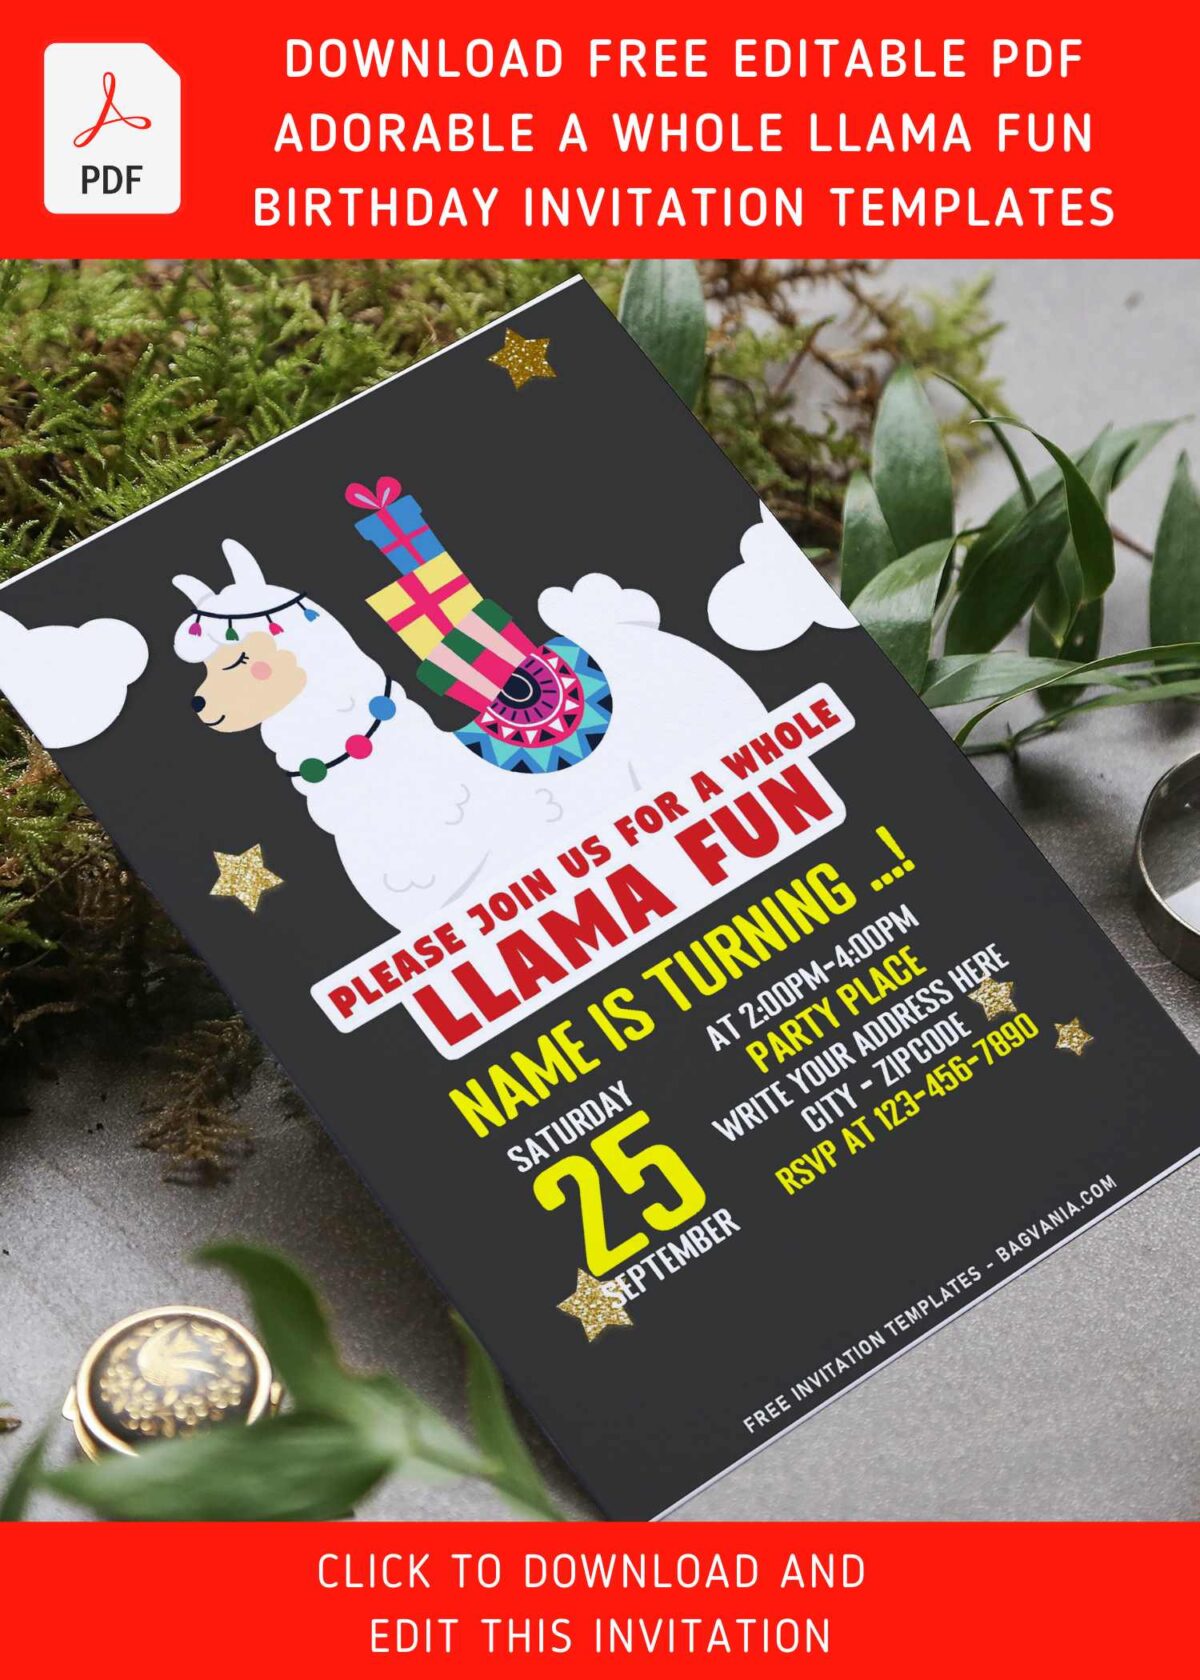 (Free Editable PDF) Super Cute Llama Party-Rama Birthday Invitation Templates with cute birthday gift boxes